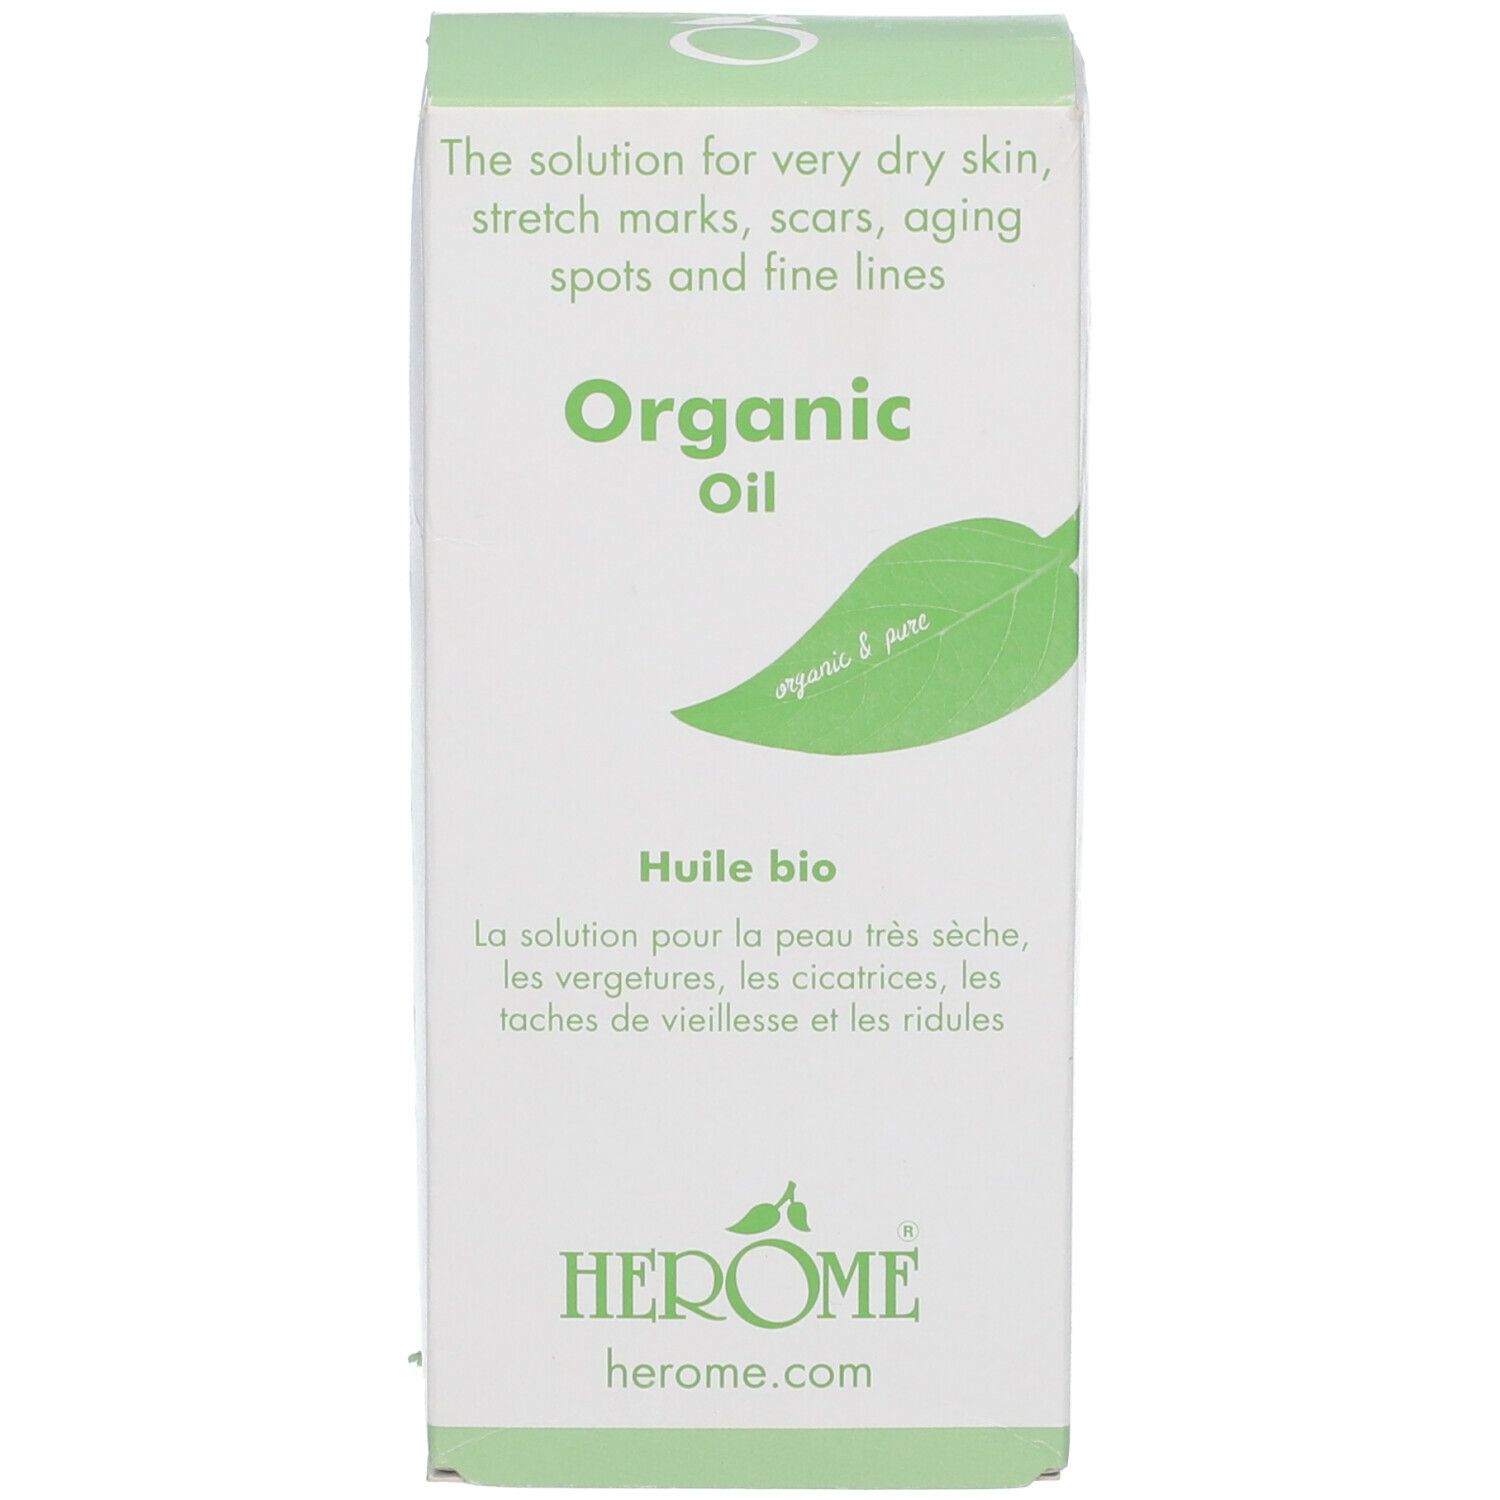 HEROME® Organic Oil